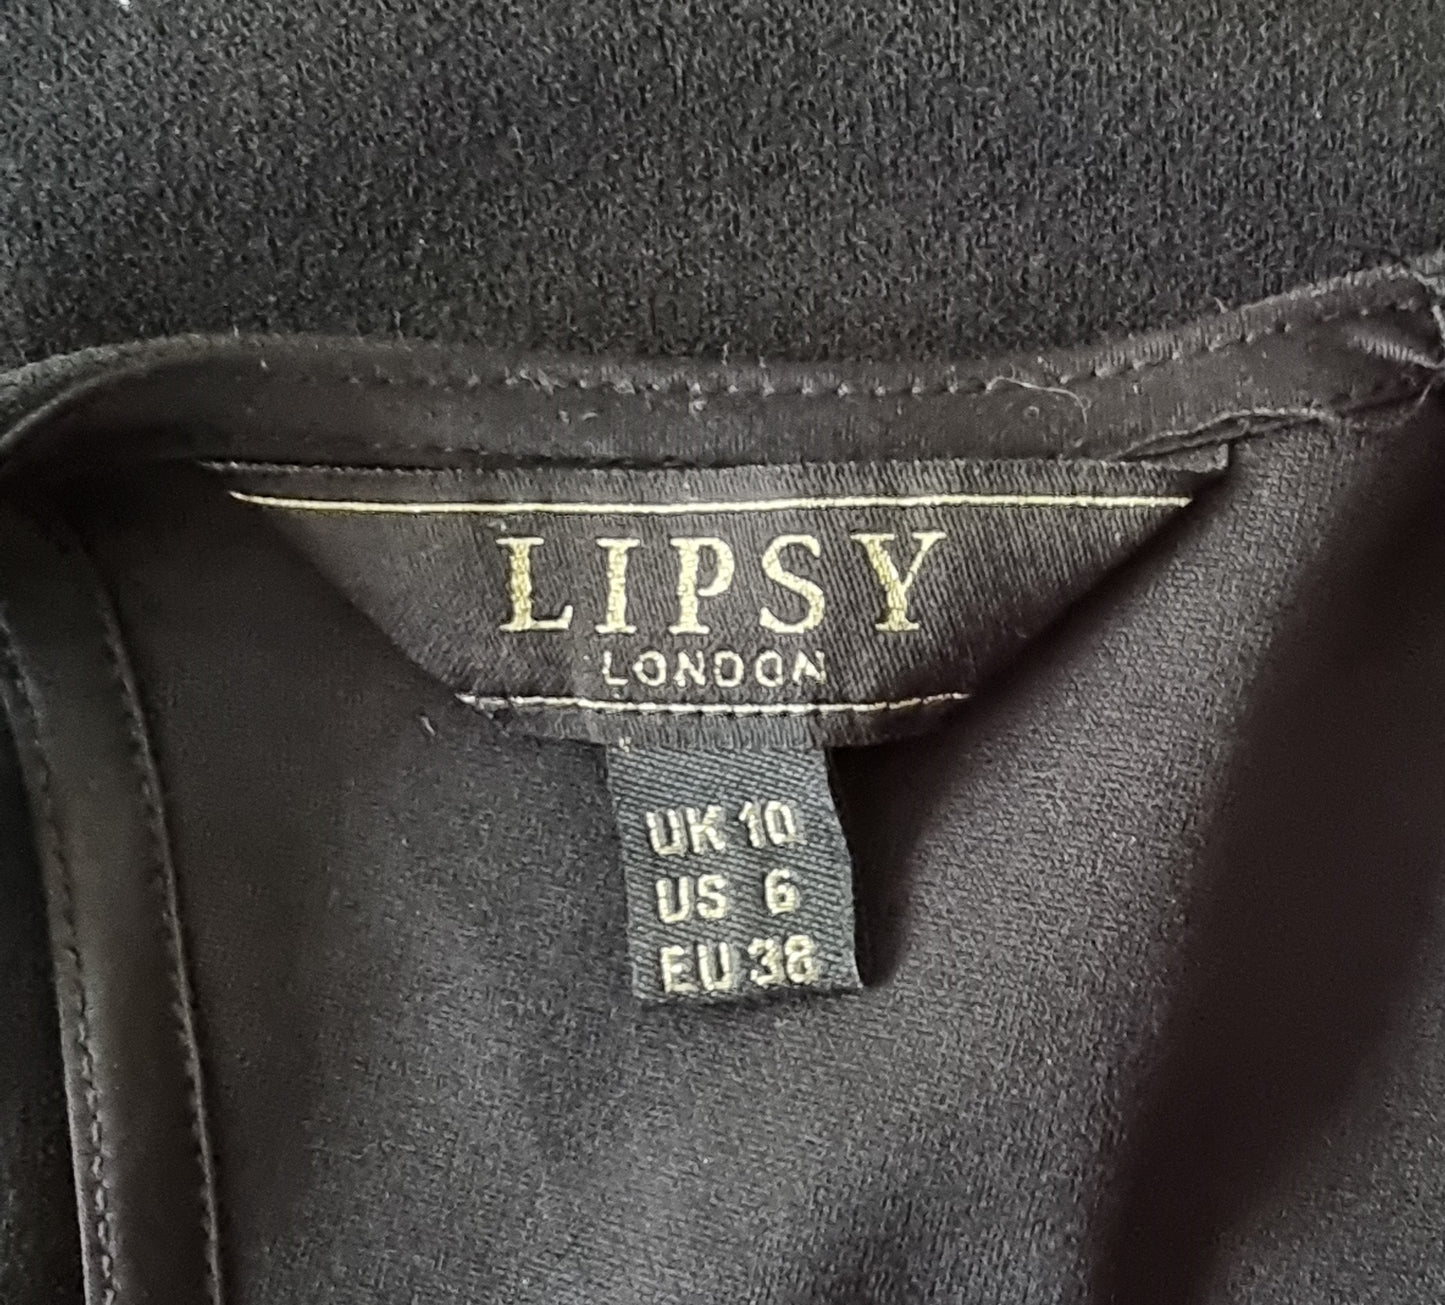 Lipsy Womens Navy & White Embroidered Bodycon Dress UK 10 US 6 EU 38 Timeless Fashions